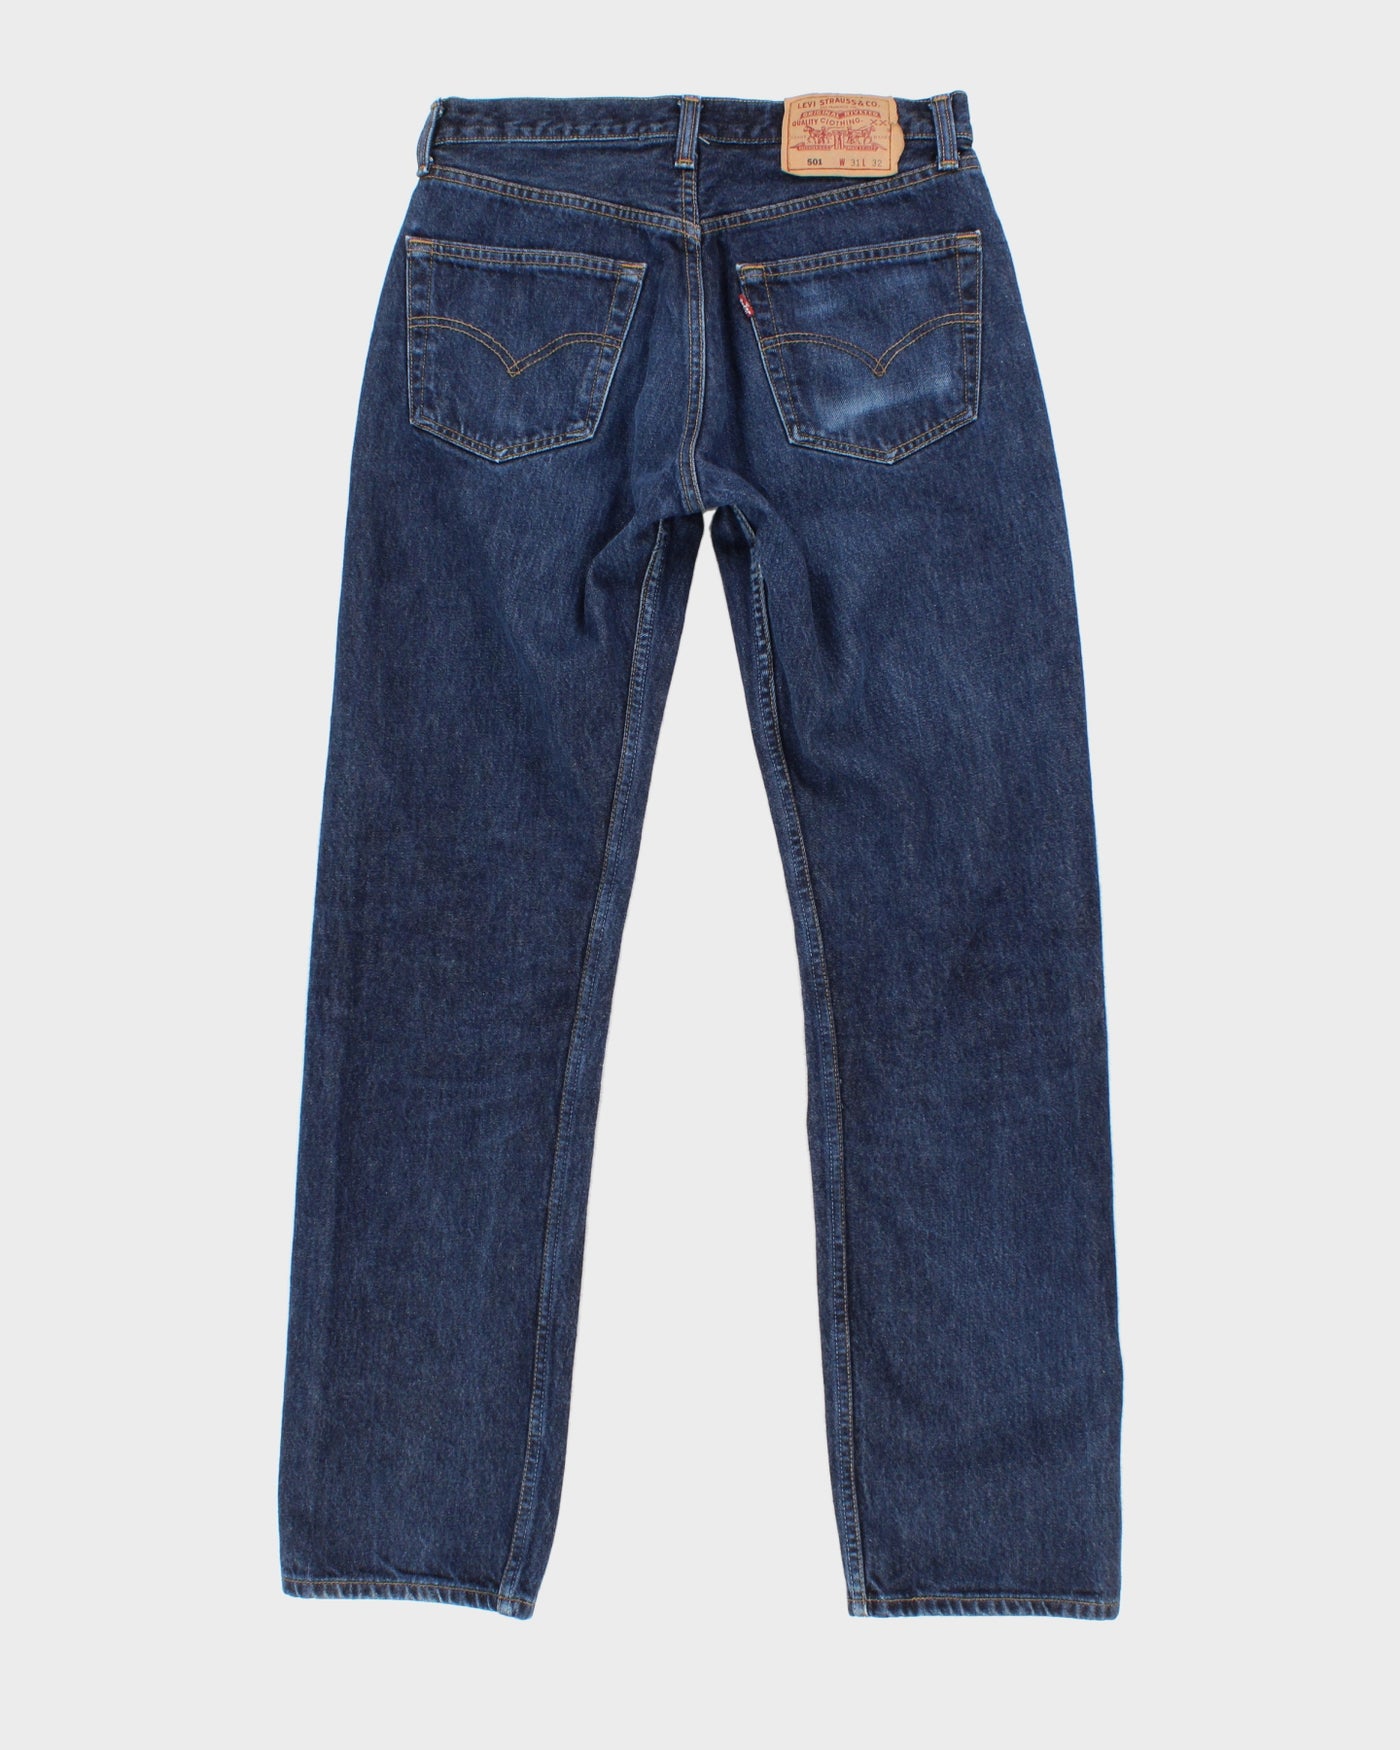 Vintage 90s Levi's Dark Wash Blue Denim 501 Jeans - W28 L31